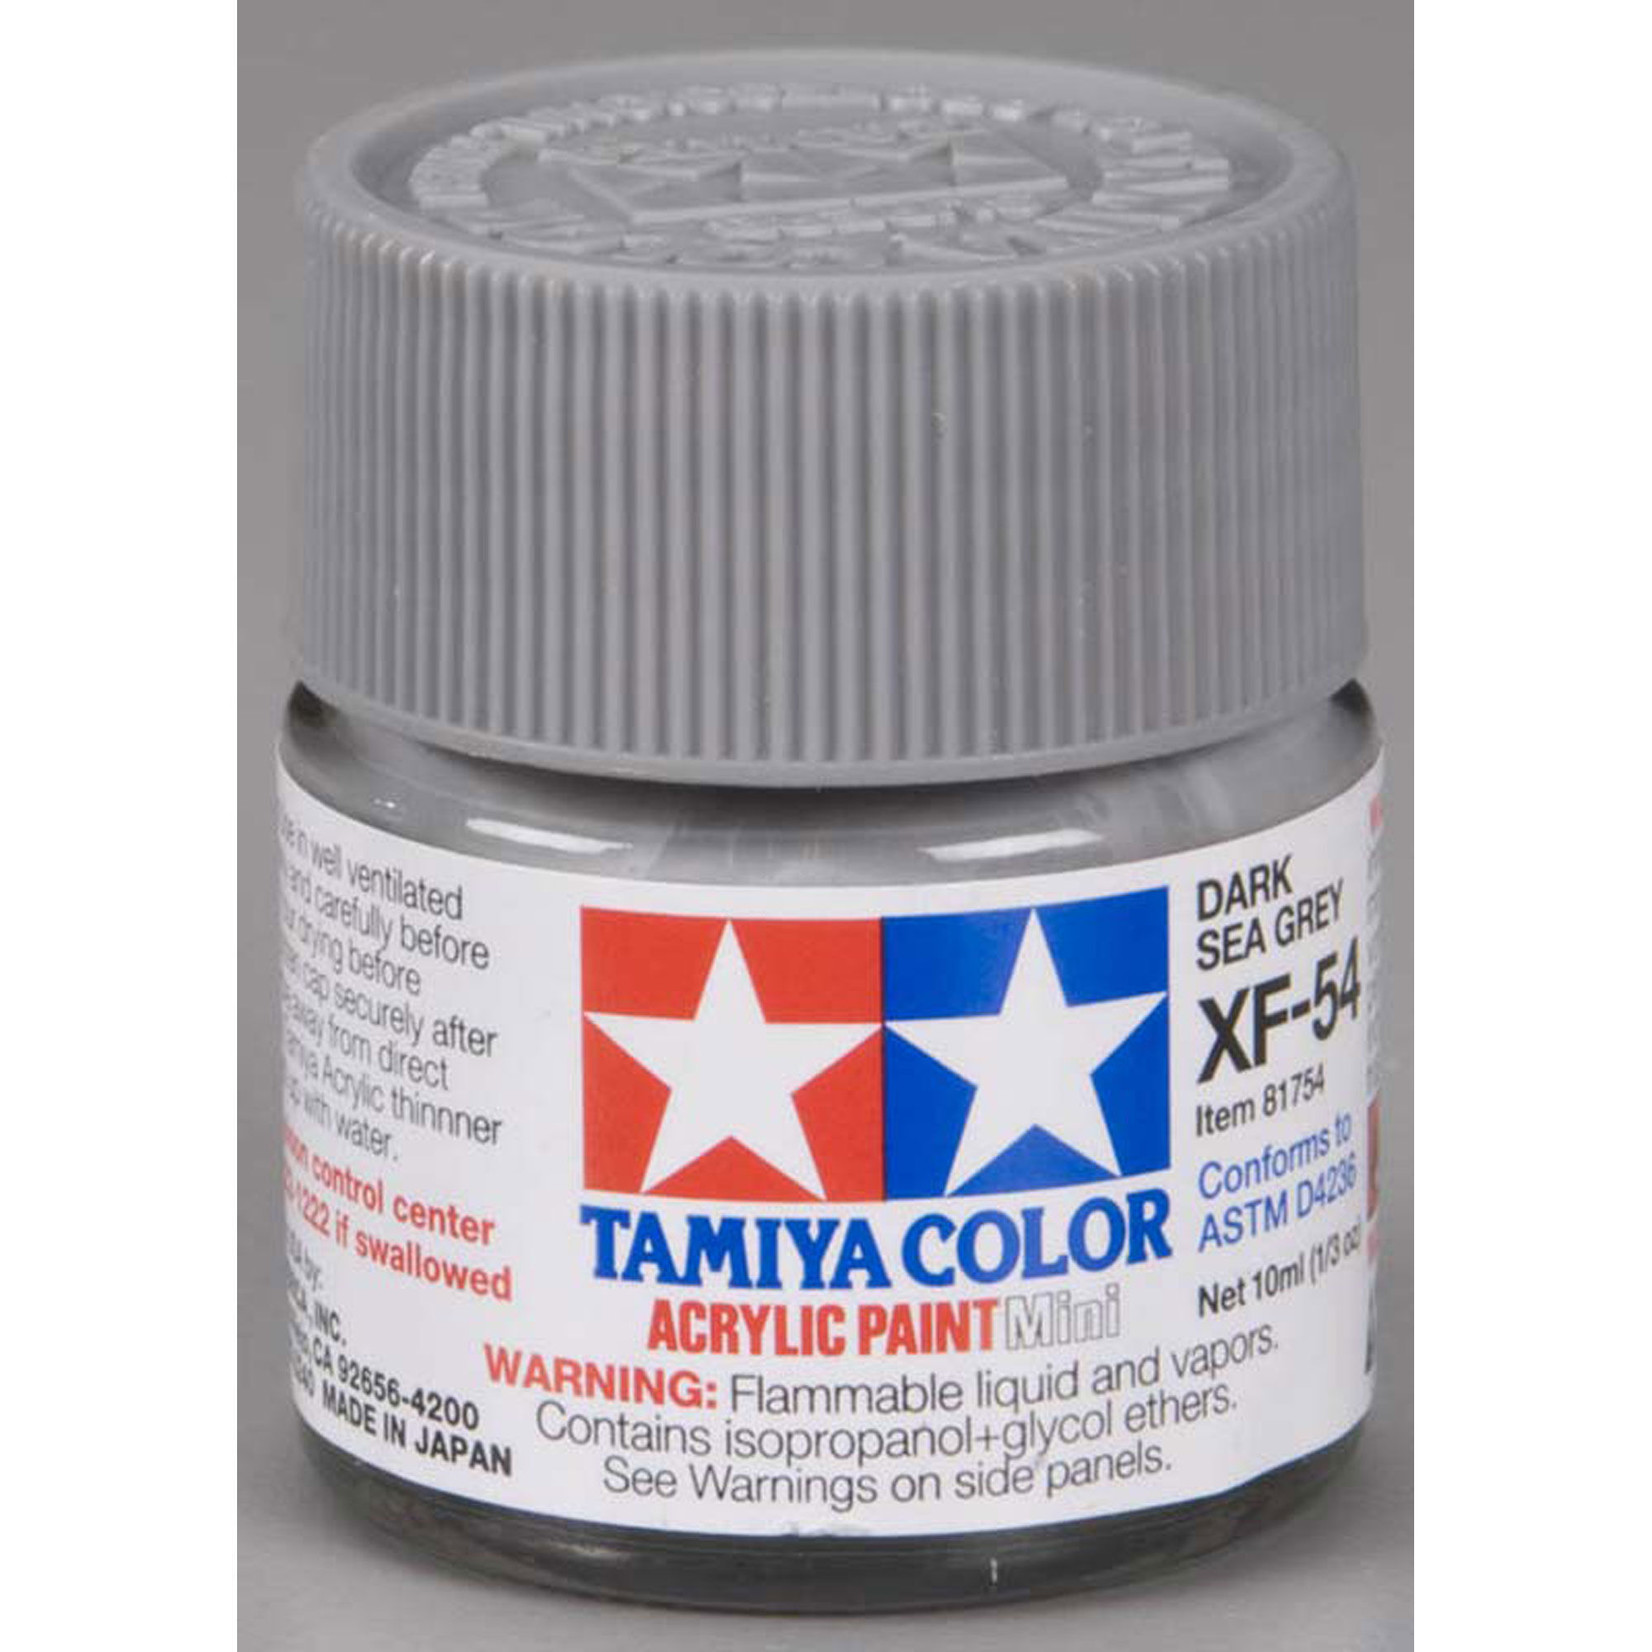 Tamiya Acrylic Mini XF54, Dk Sea Grey